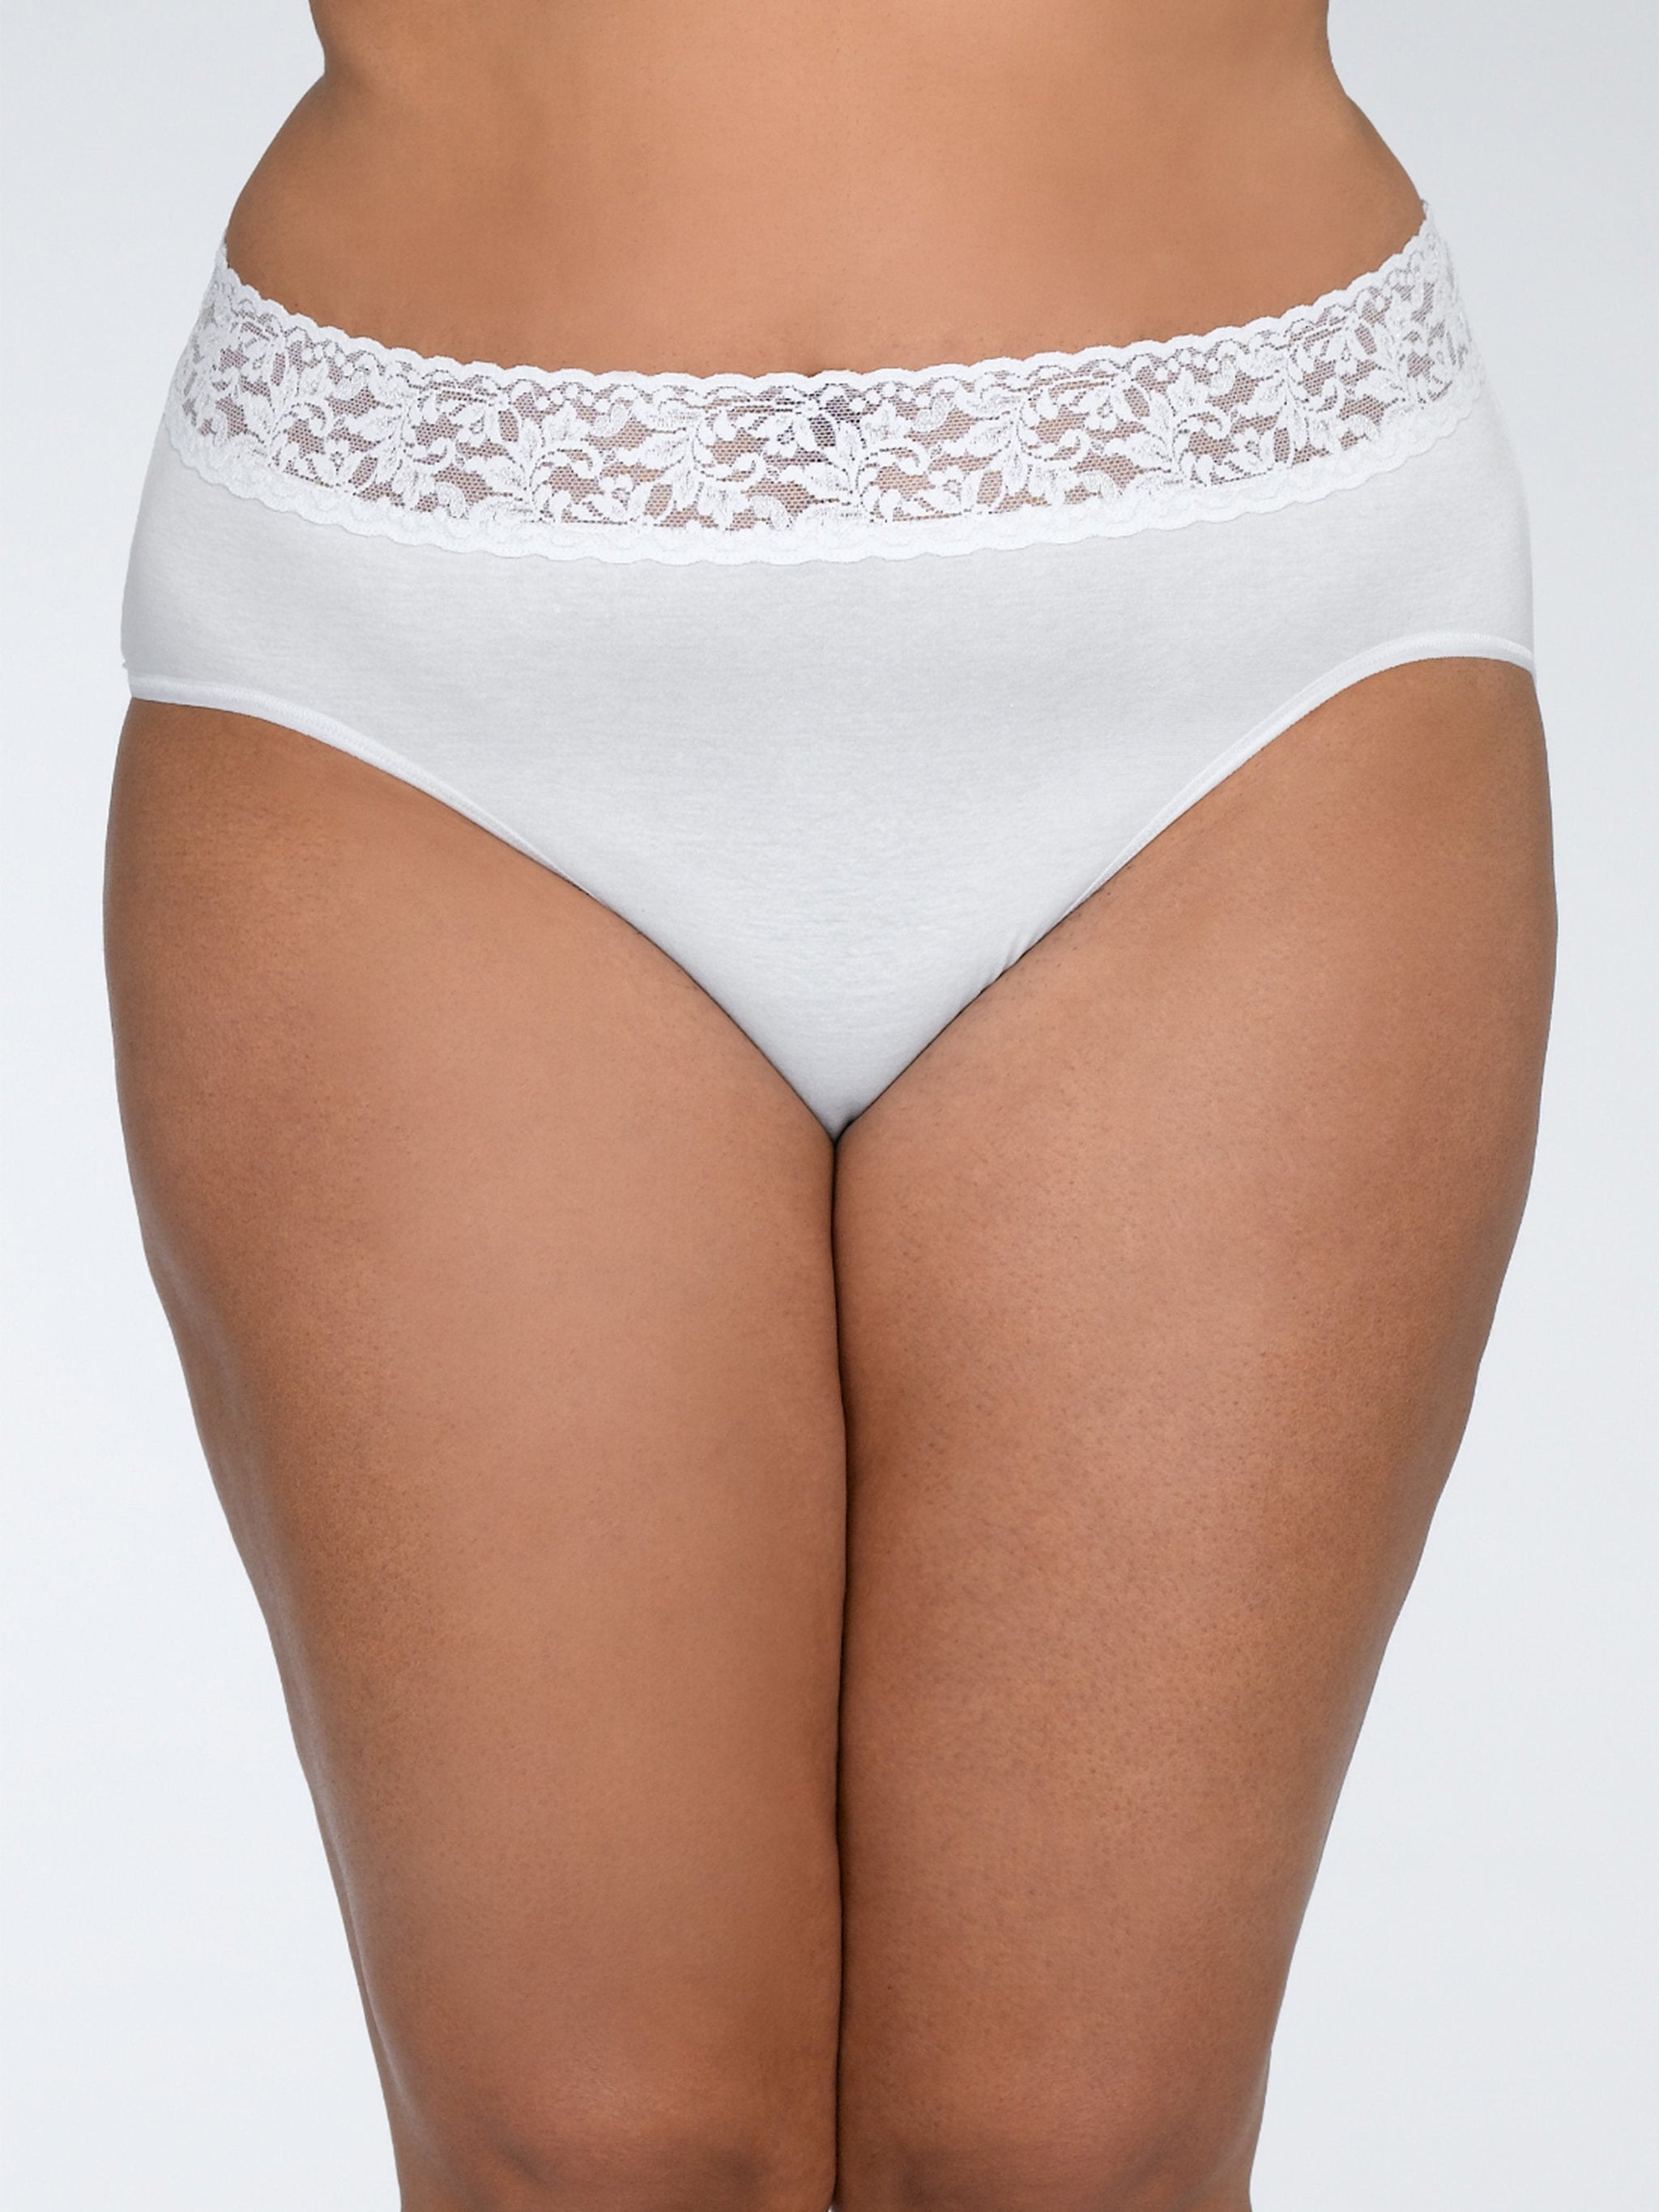 Buy MySexyShorts Naughty Flirty Women's Underwear, Seamless Cotton